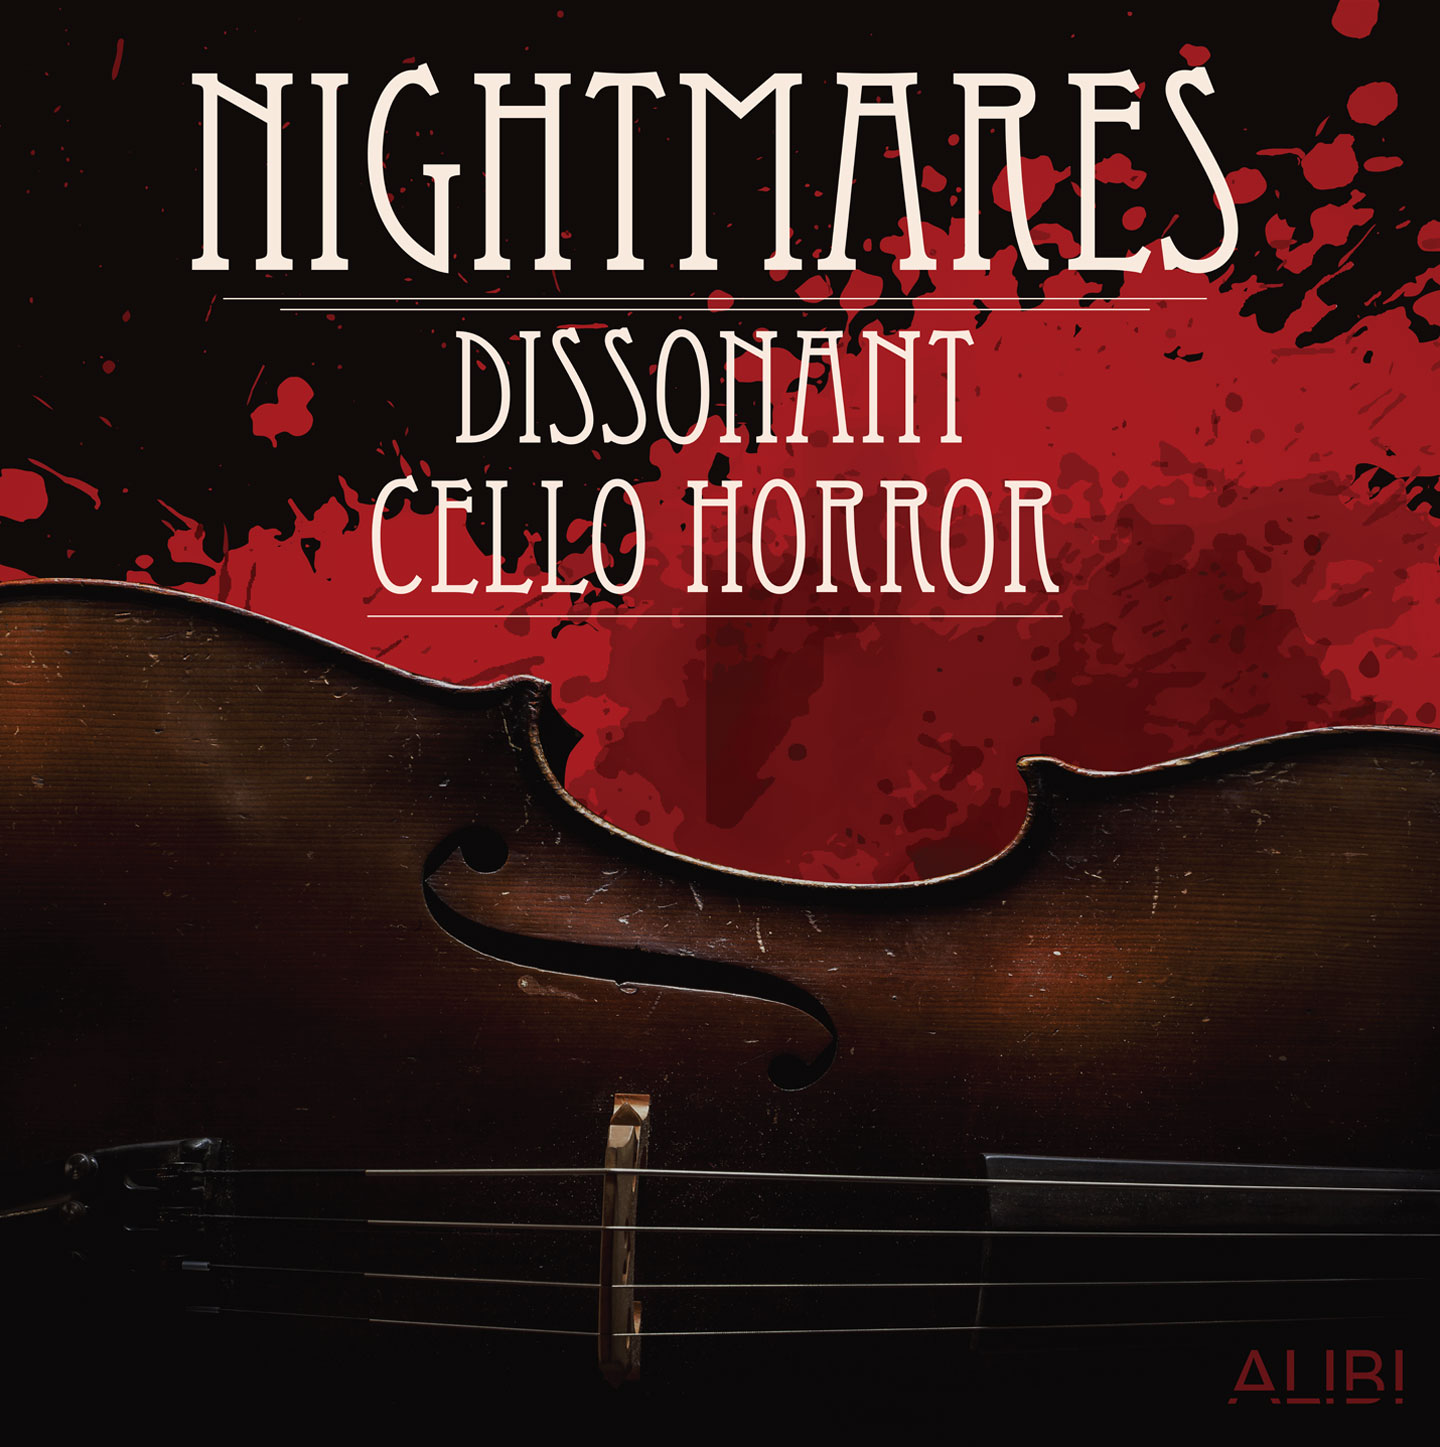 Nightmares: Dissonant Cello Horror. Alibi Music Library. Cello; blood spatter